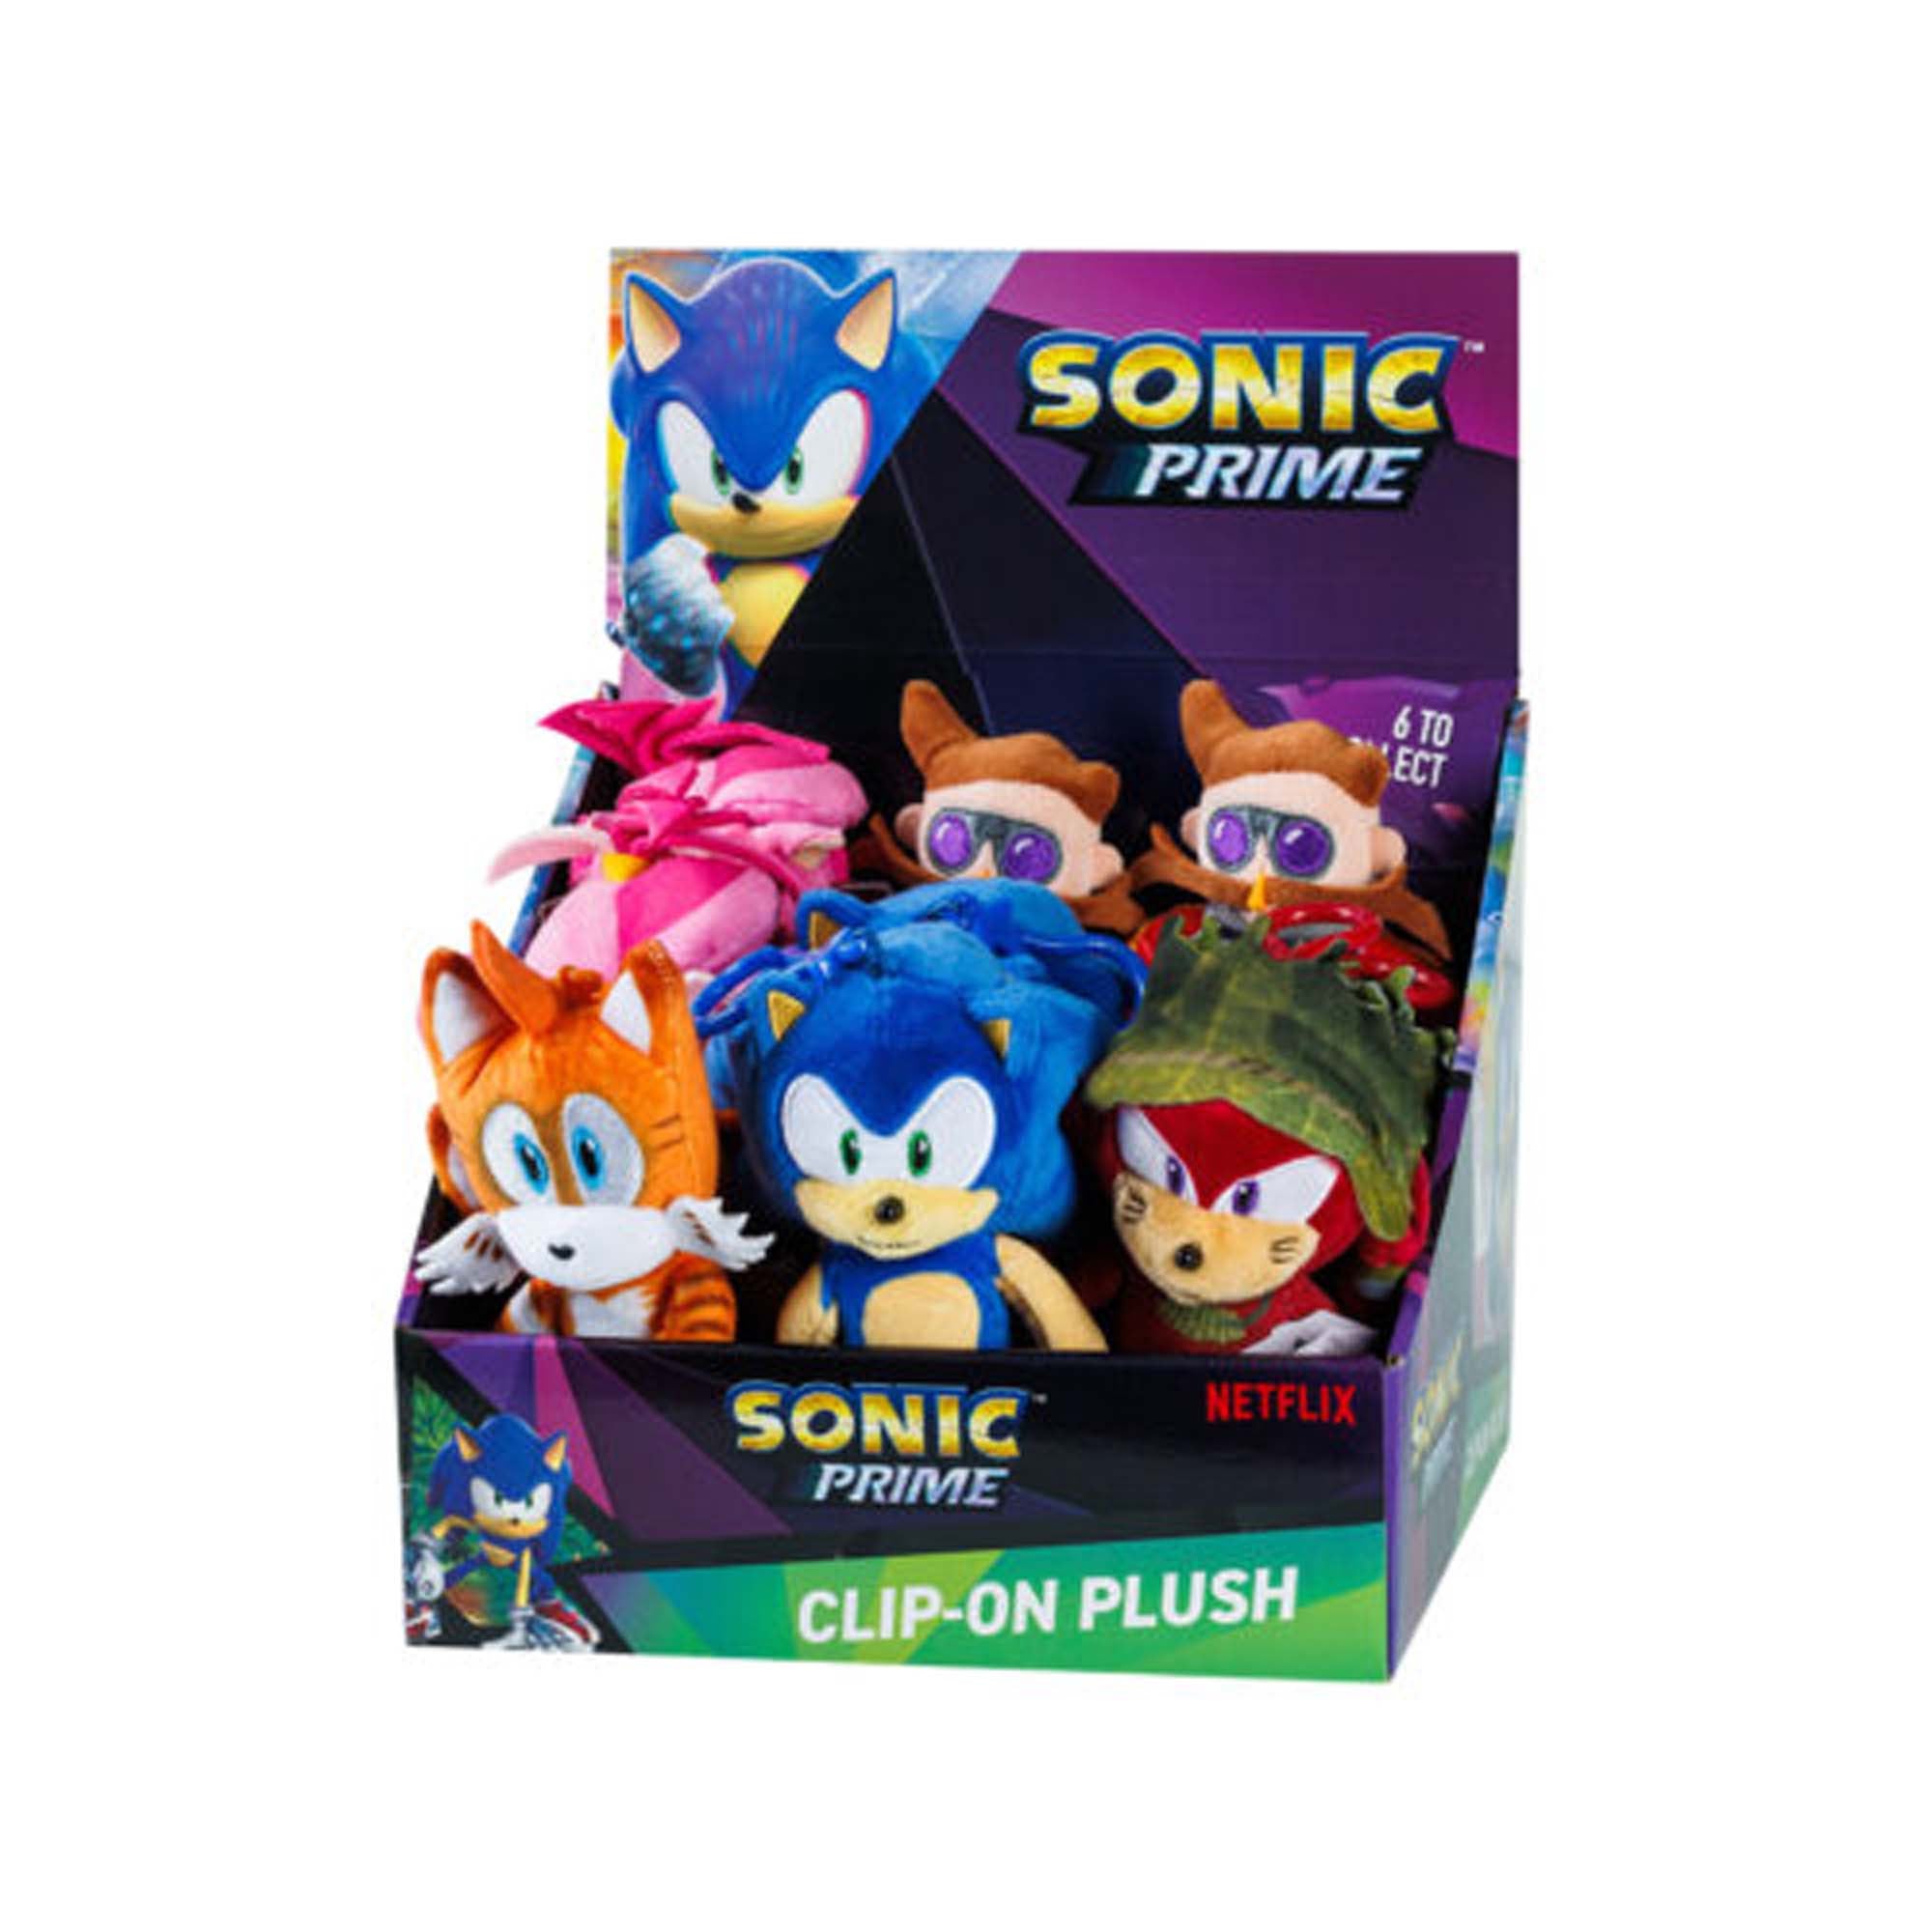 Acheter Sac à dos Sonic Prime Time en ligne?